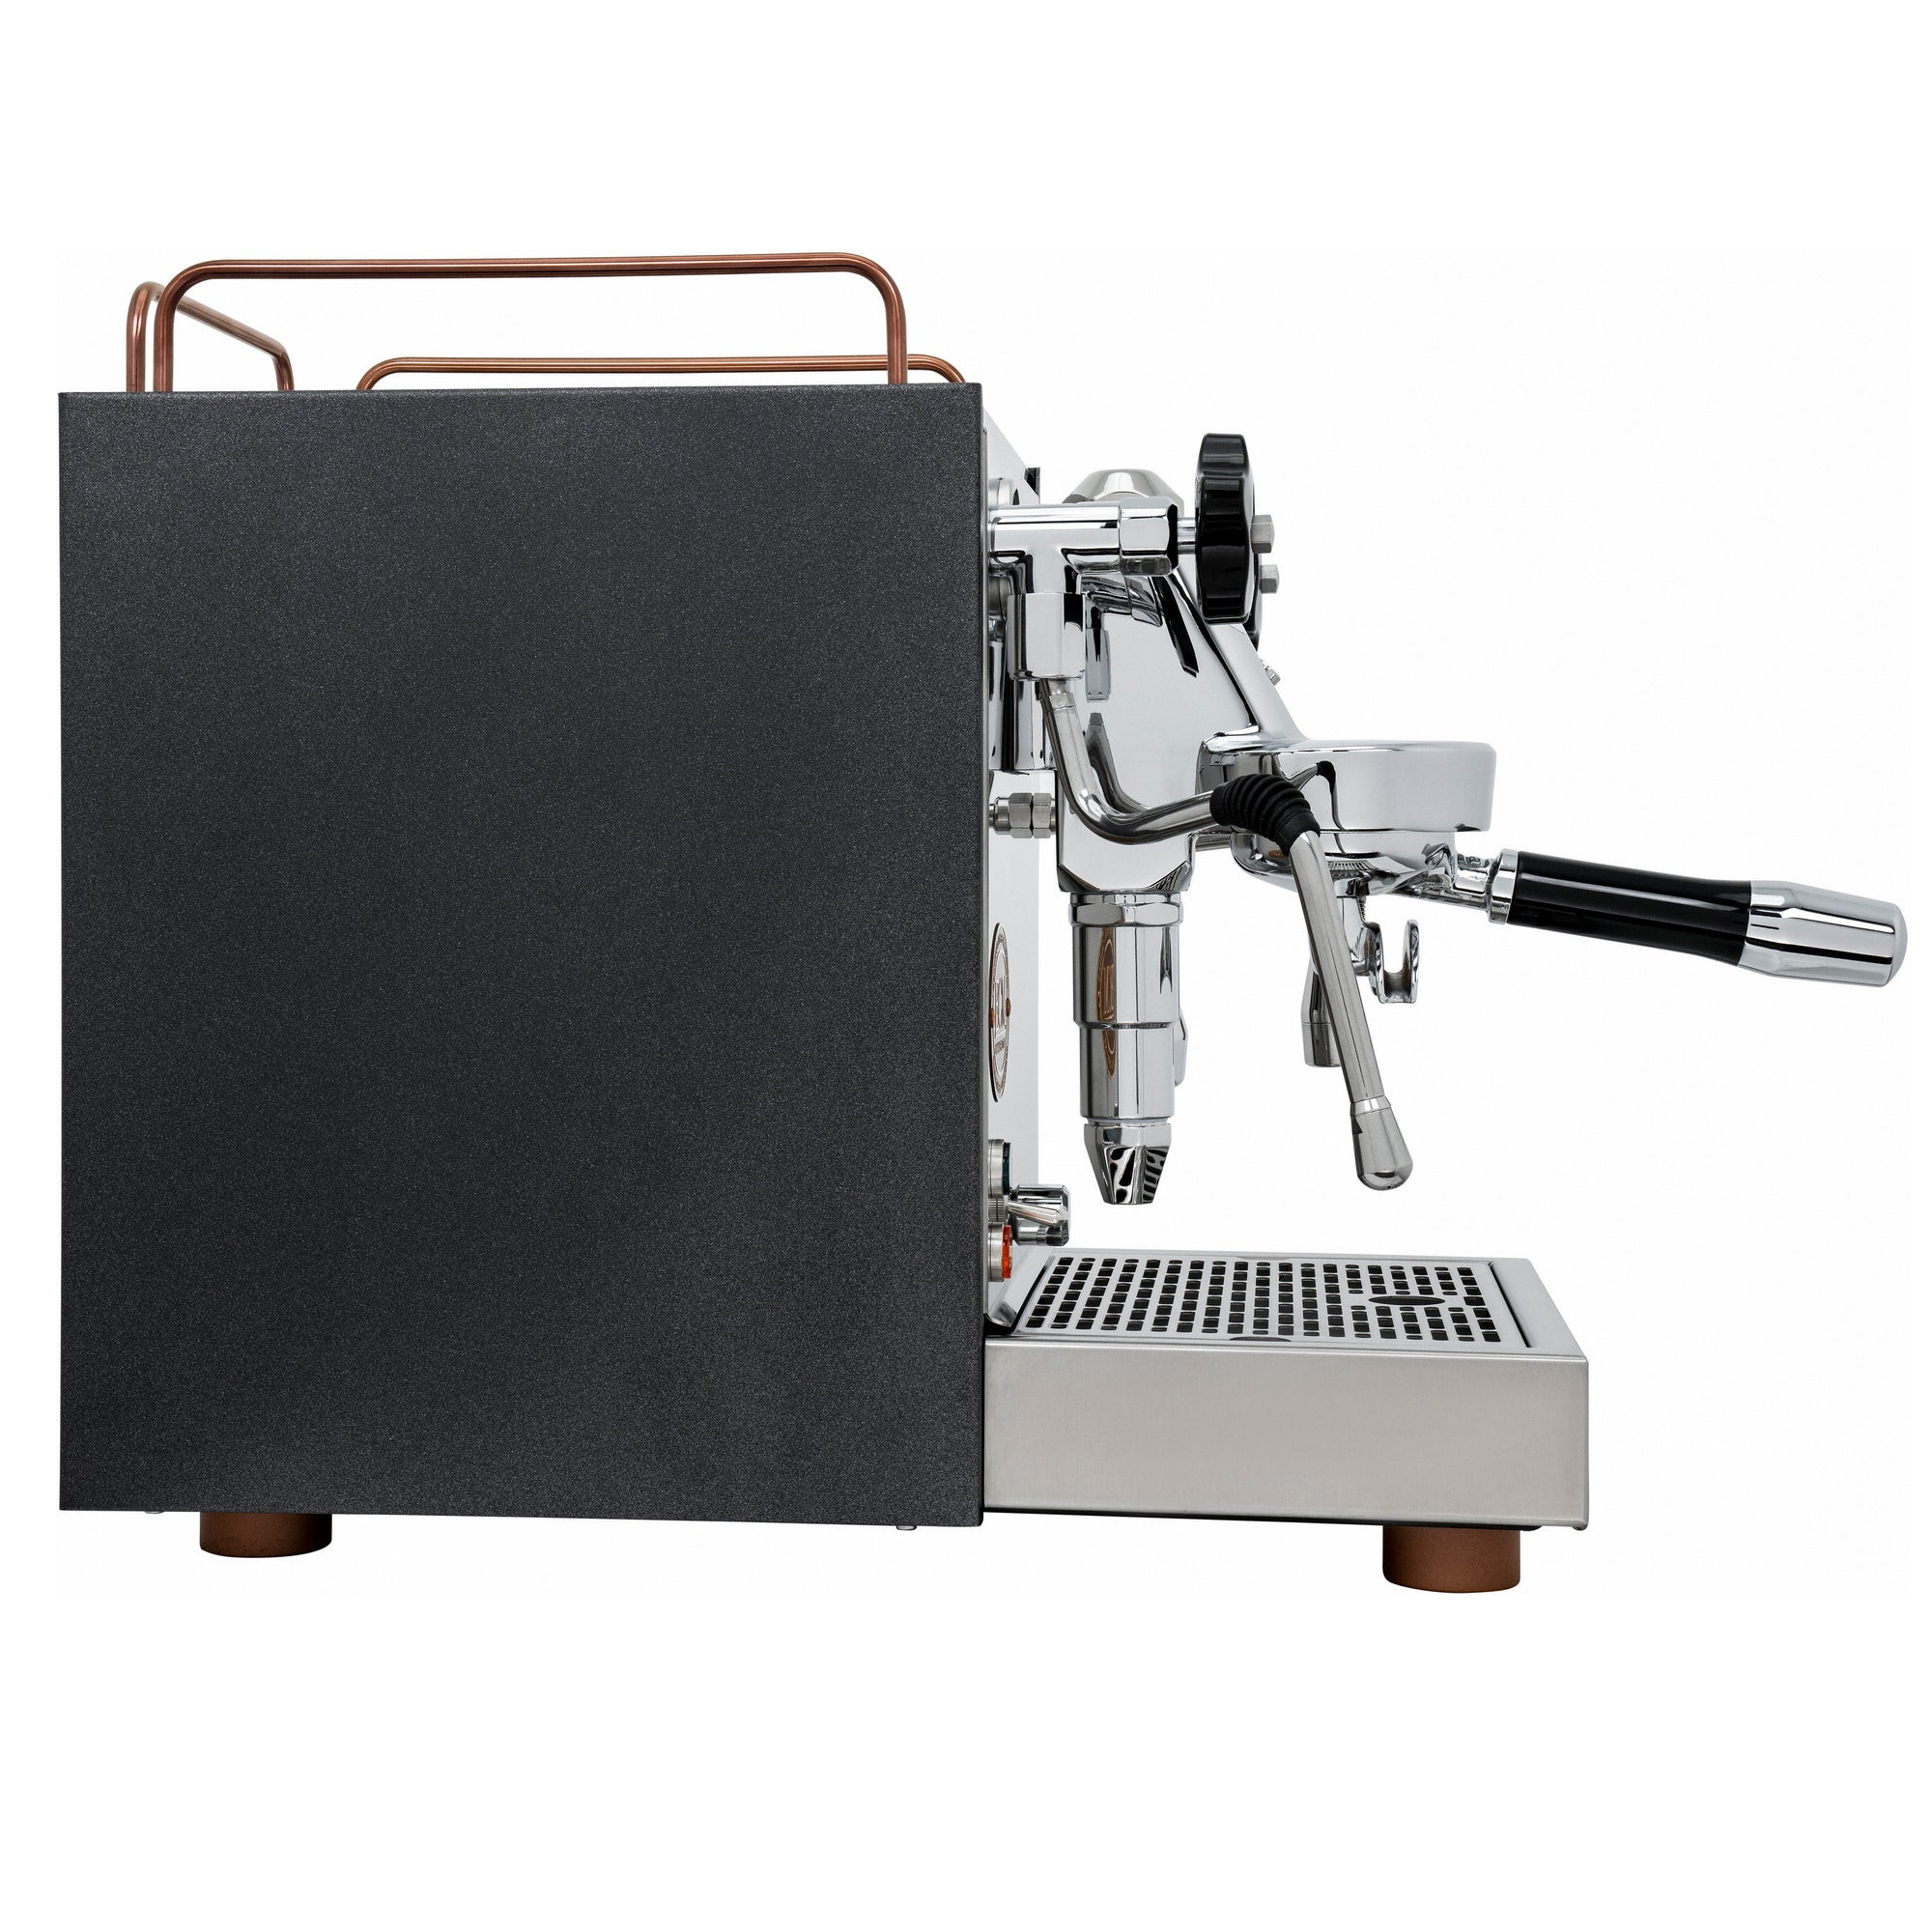 ECM Mechanika VI Slim Espresso Machine - Heritage Edition